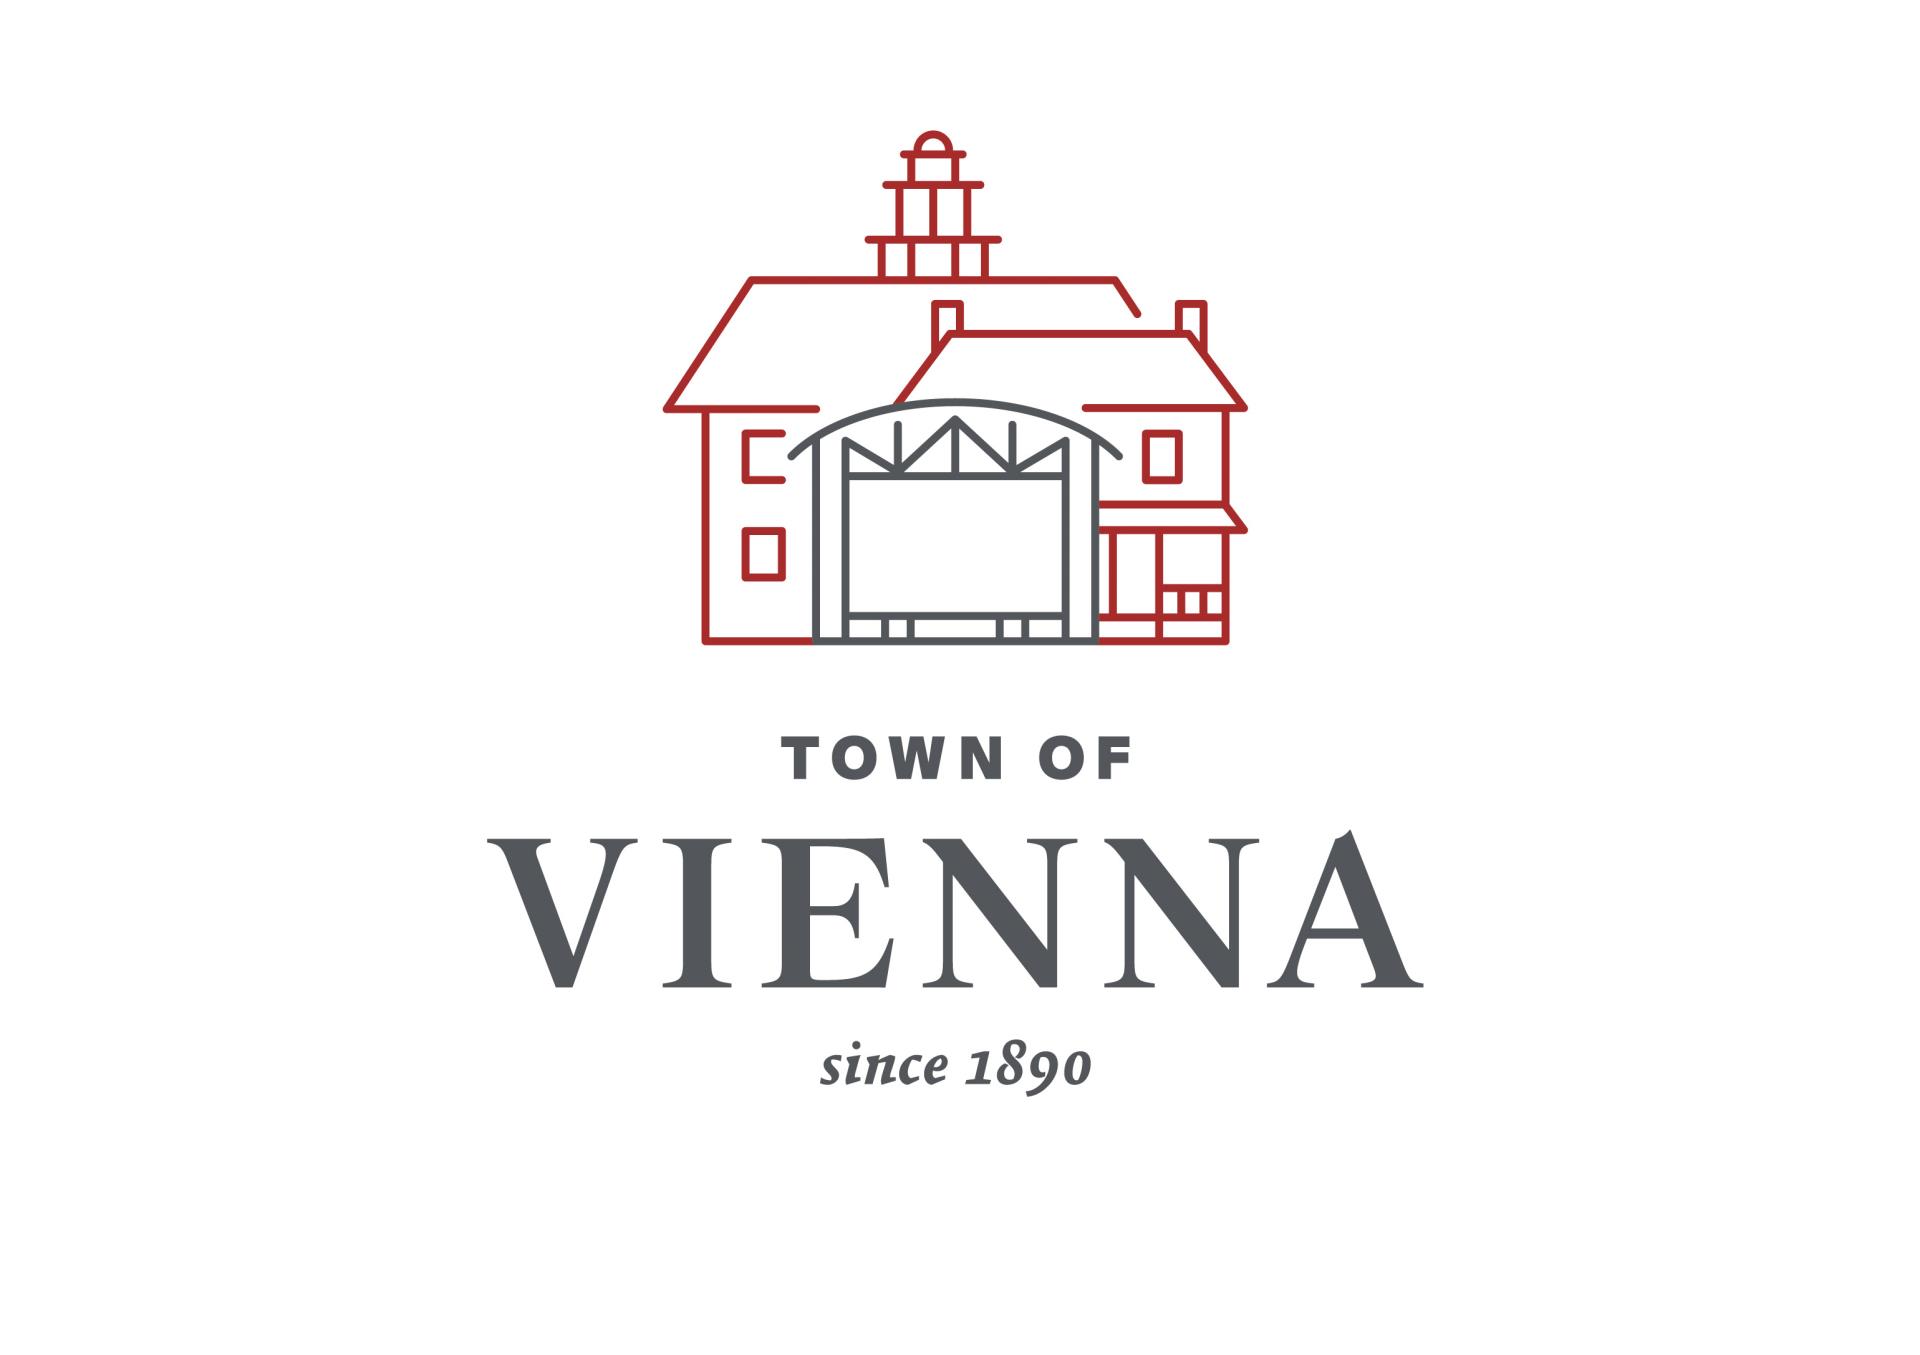 Official town logo